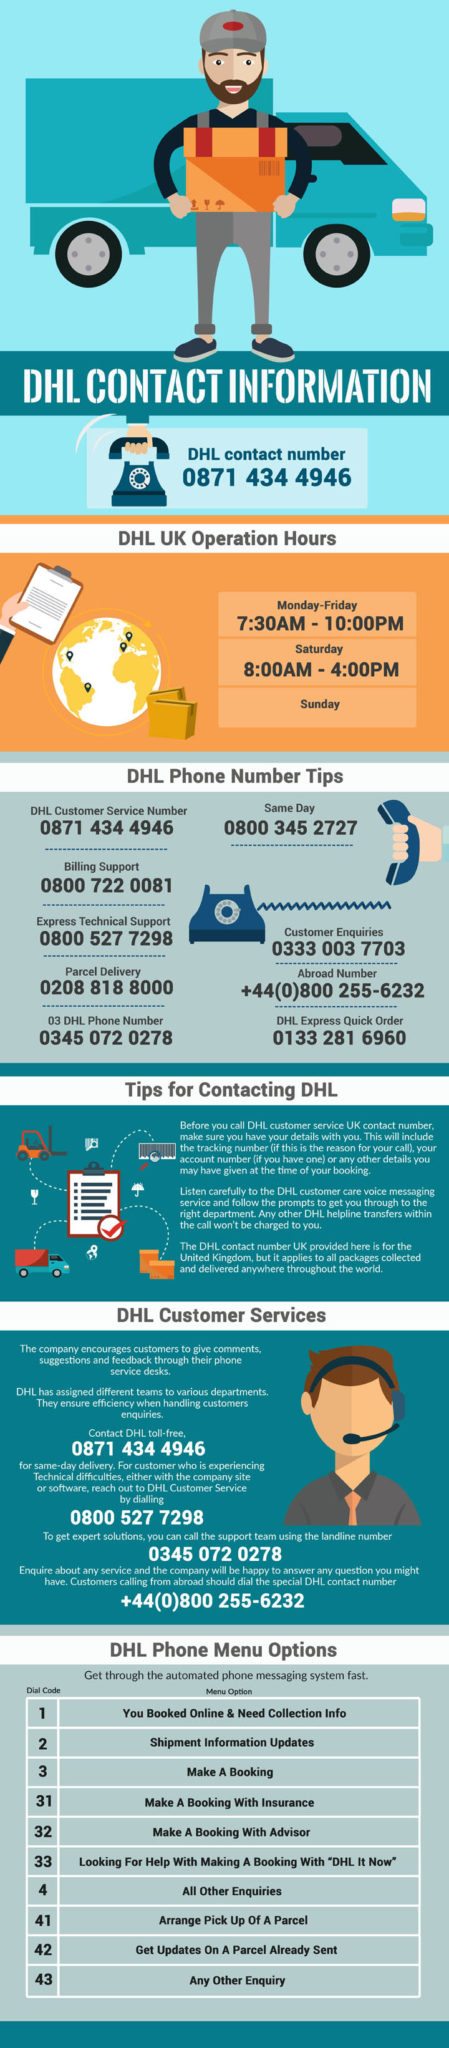 DHL Helpline